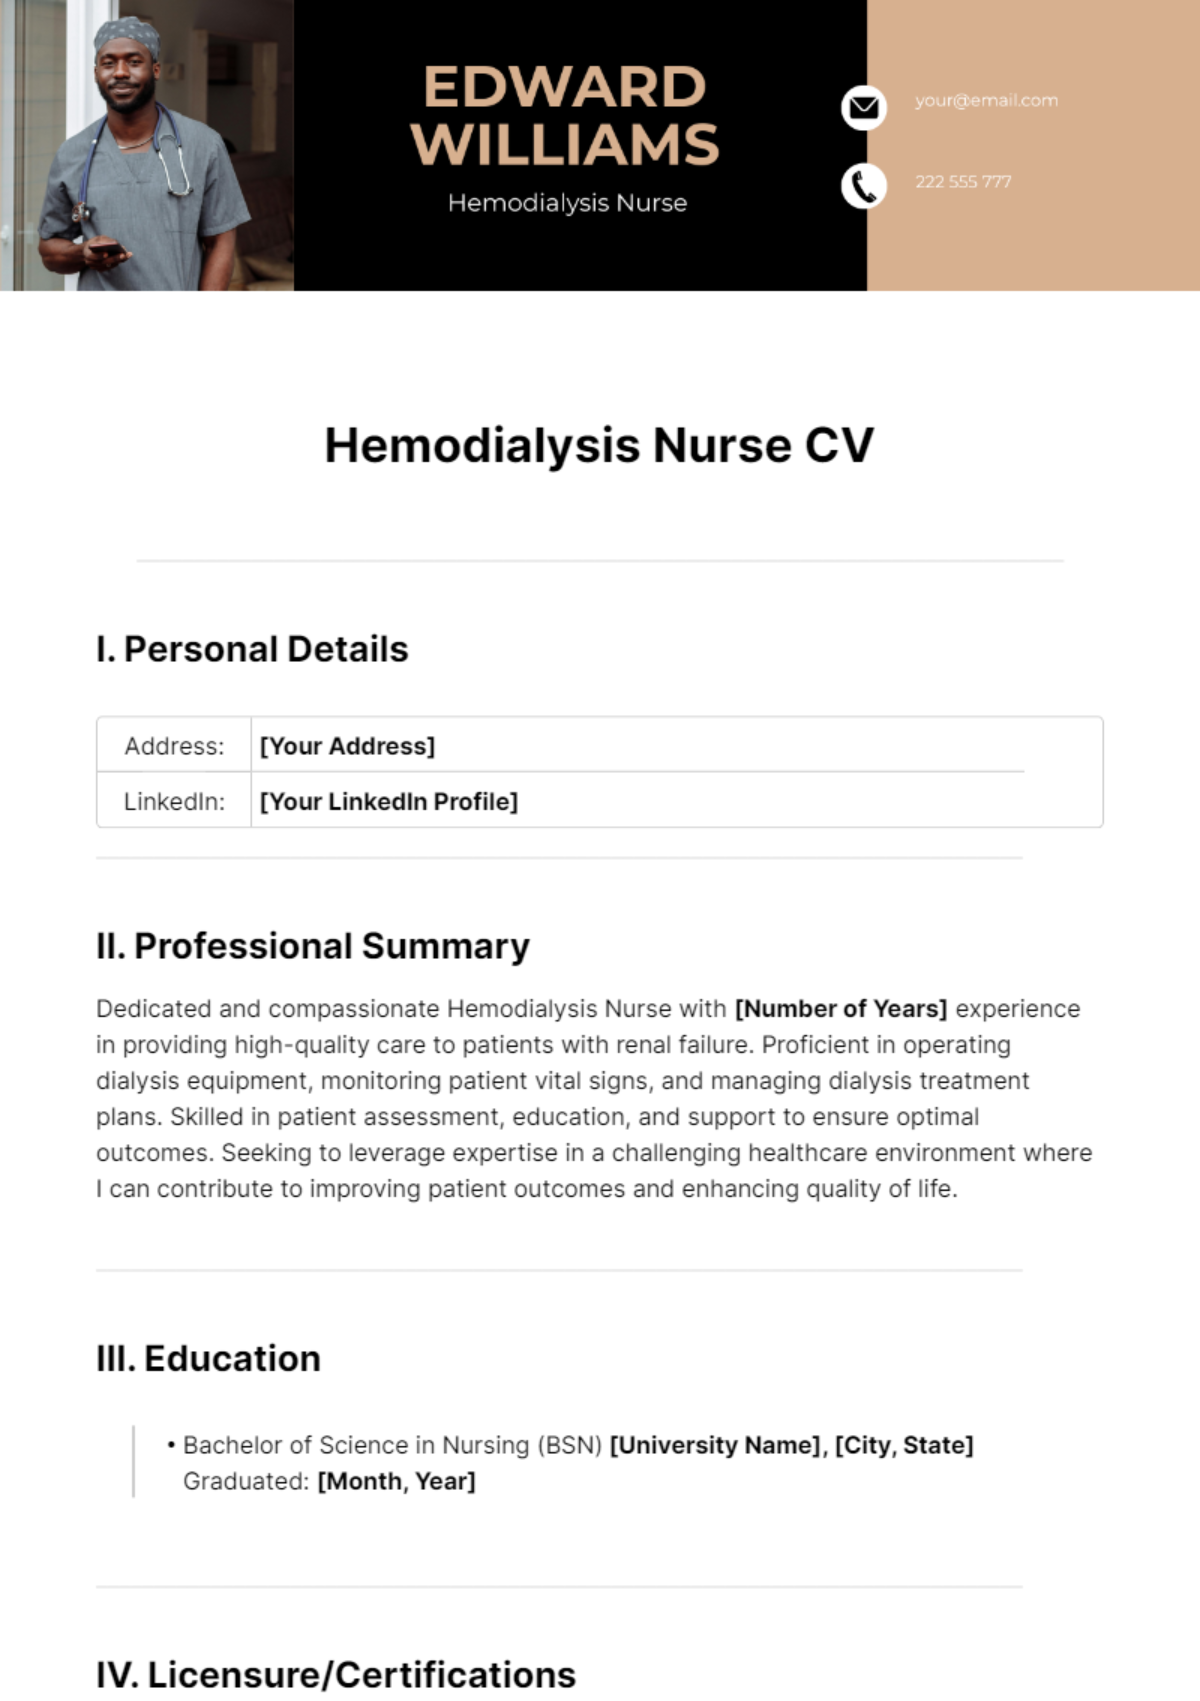 Hemodialysis Nurse CV Template